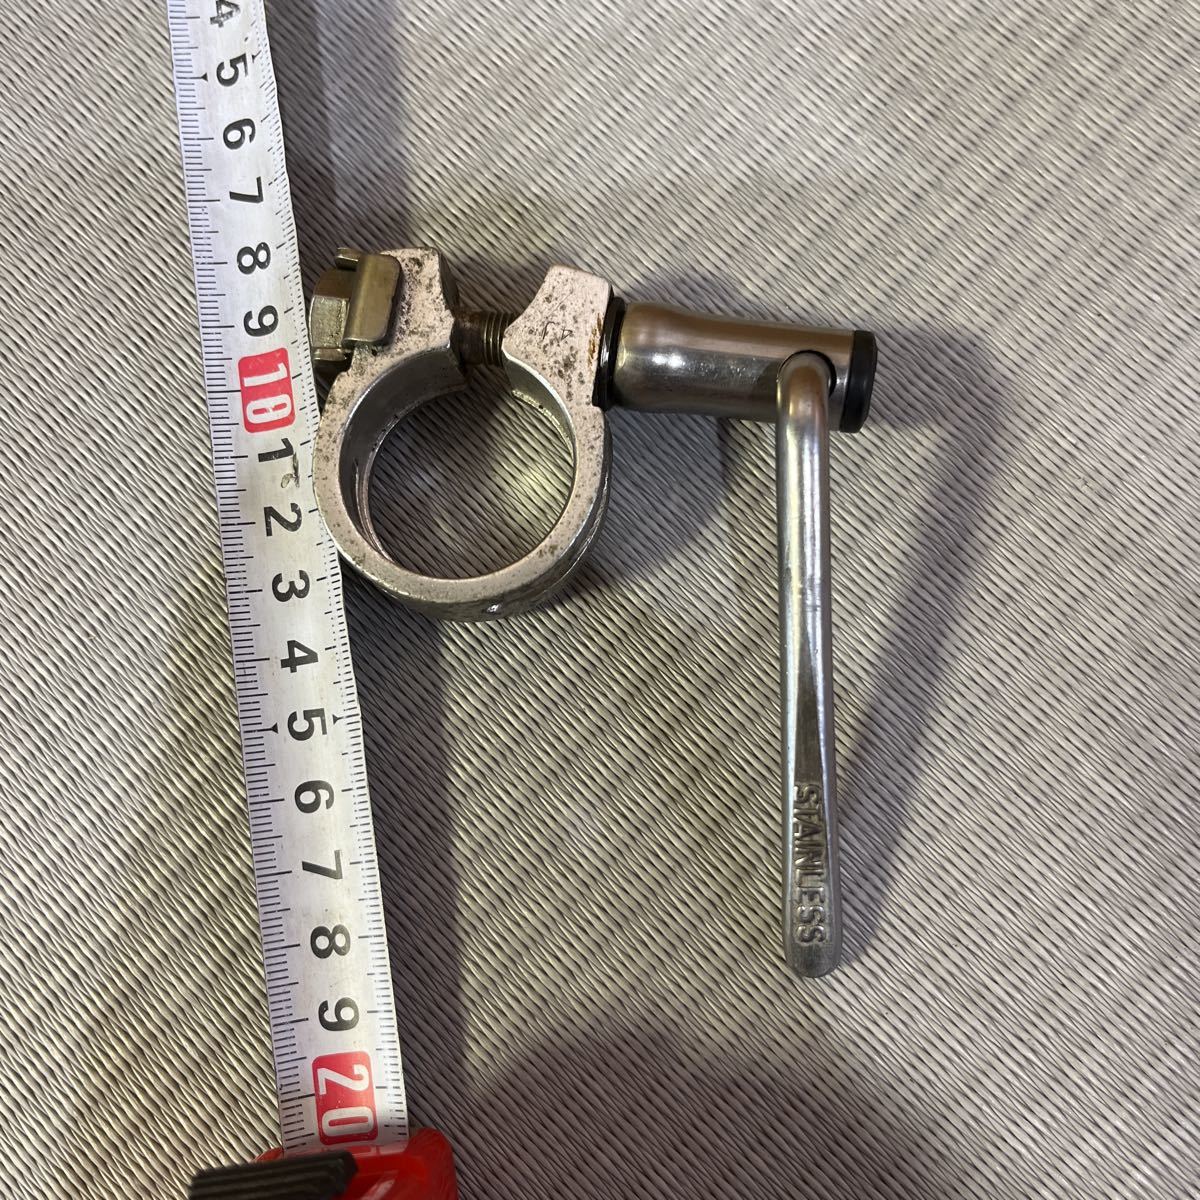  Bridgestone ] Albert bireta saddle clamp secondhand goods sheet clamp ka Roo sa